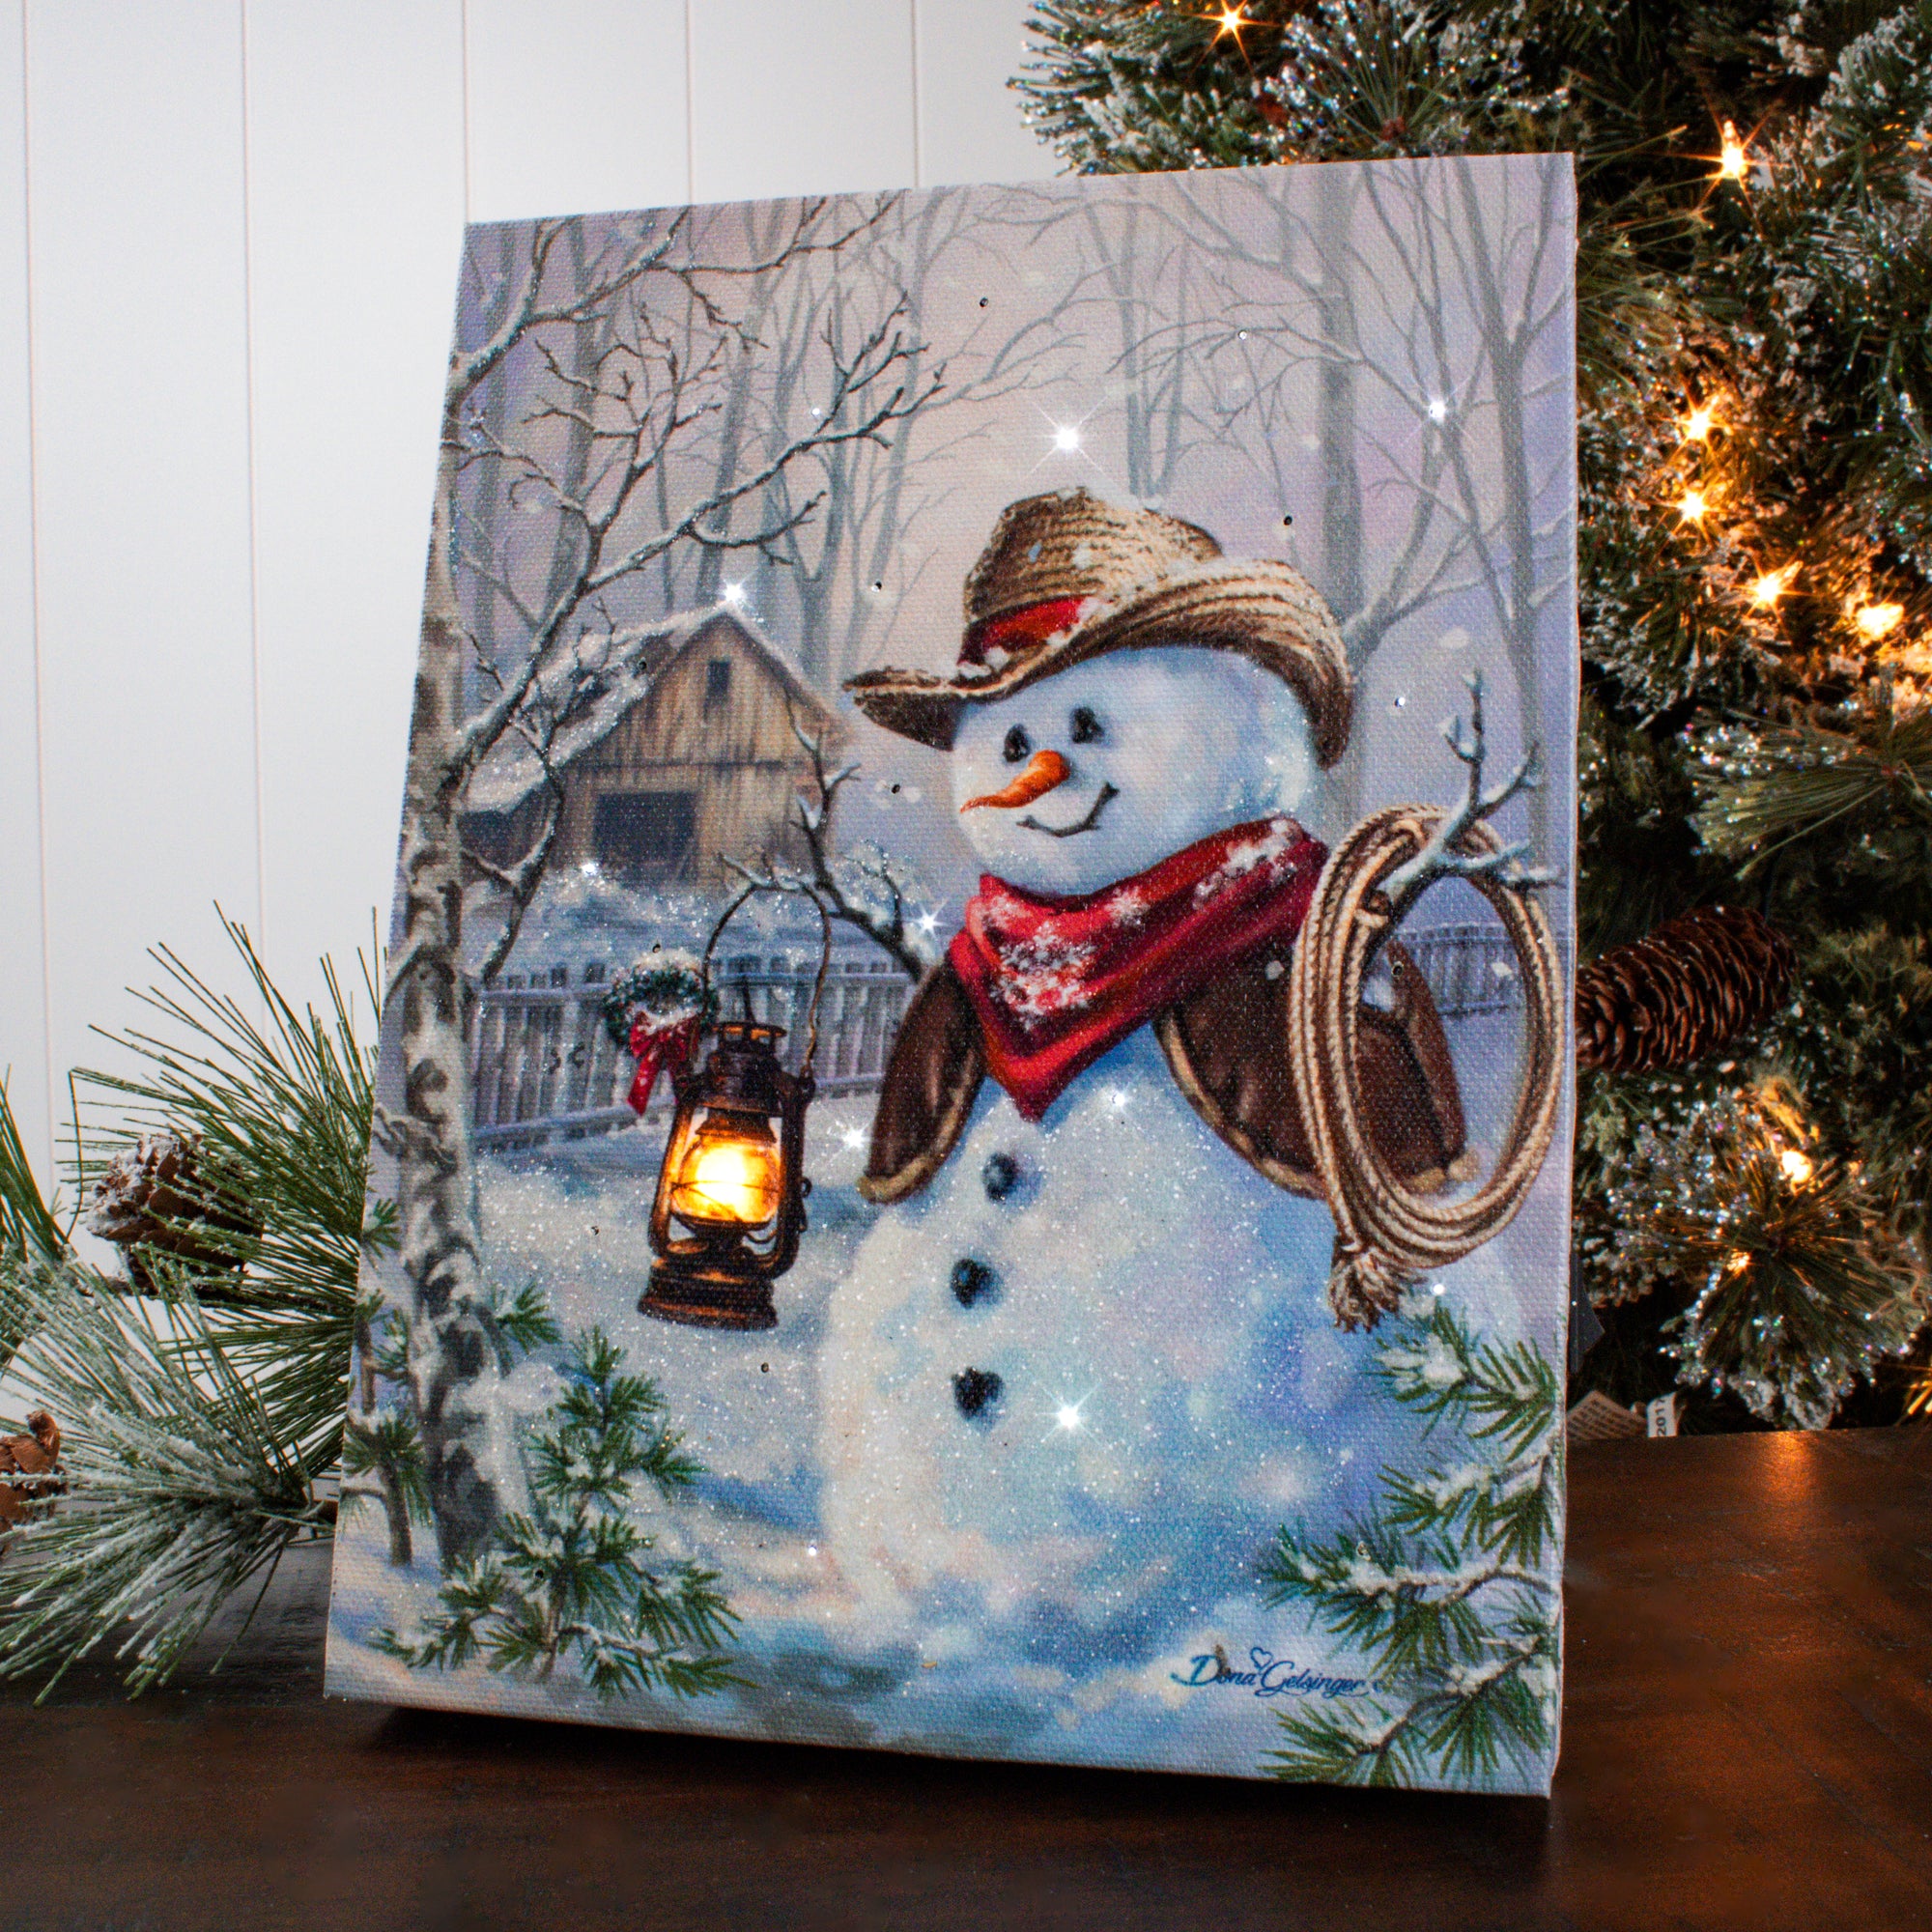 Cowboy Snowman 8x6 Lighted Tabletop Canvas